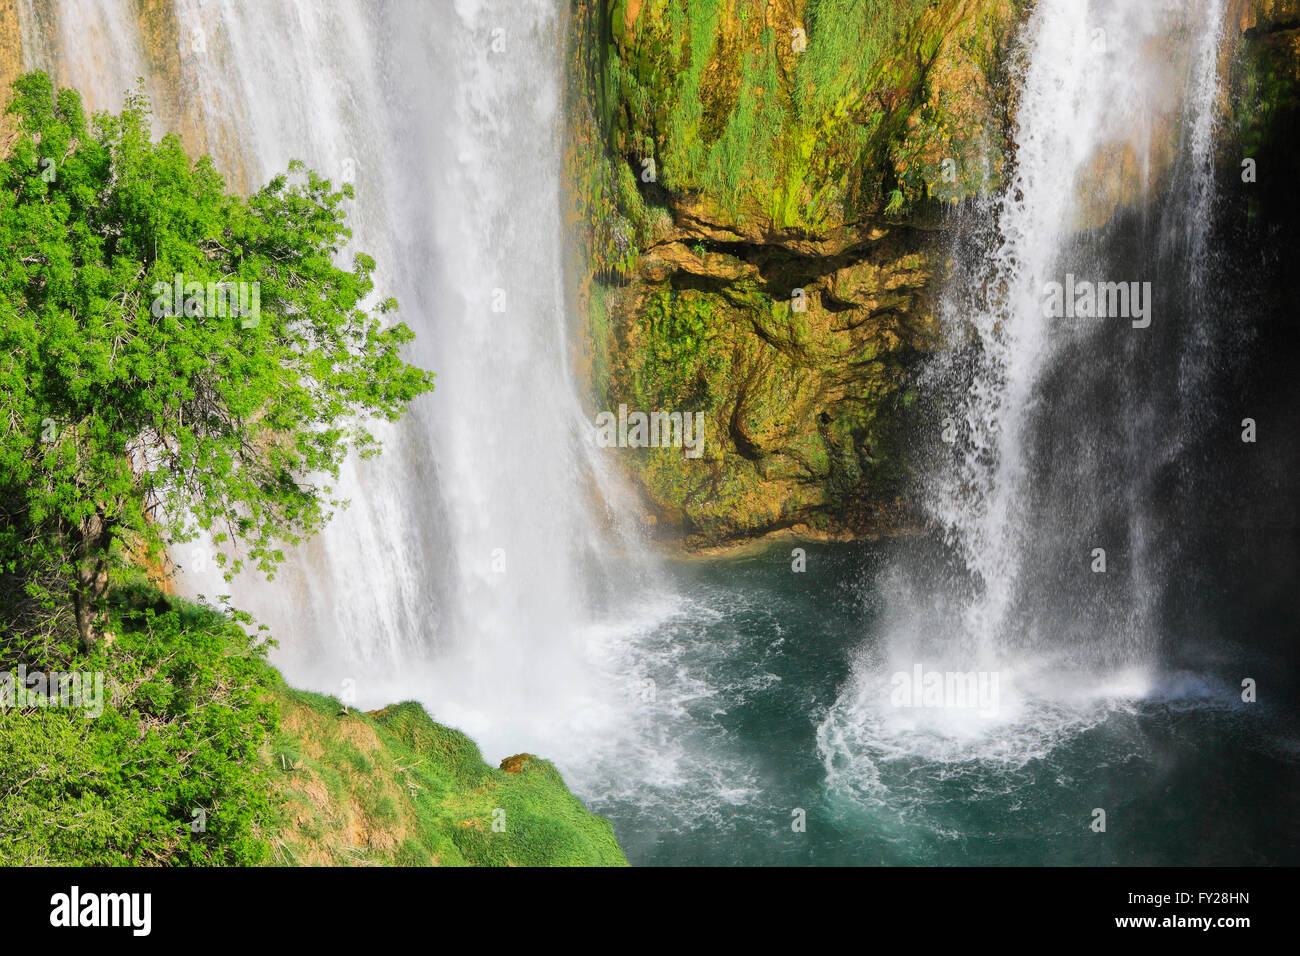 Waterfall 'Manojlovac' in National Park Krka, Croatia Stock Photo